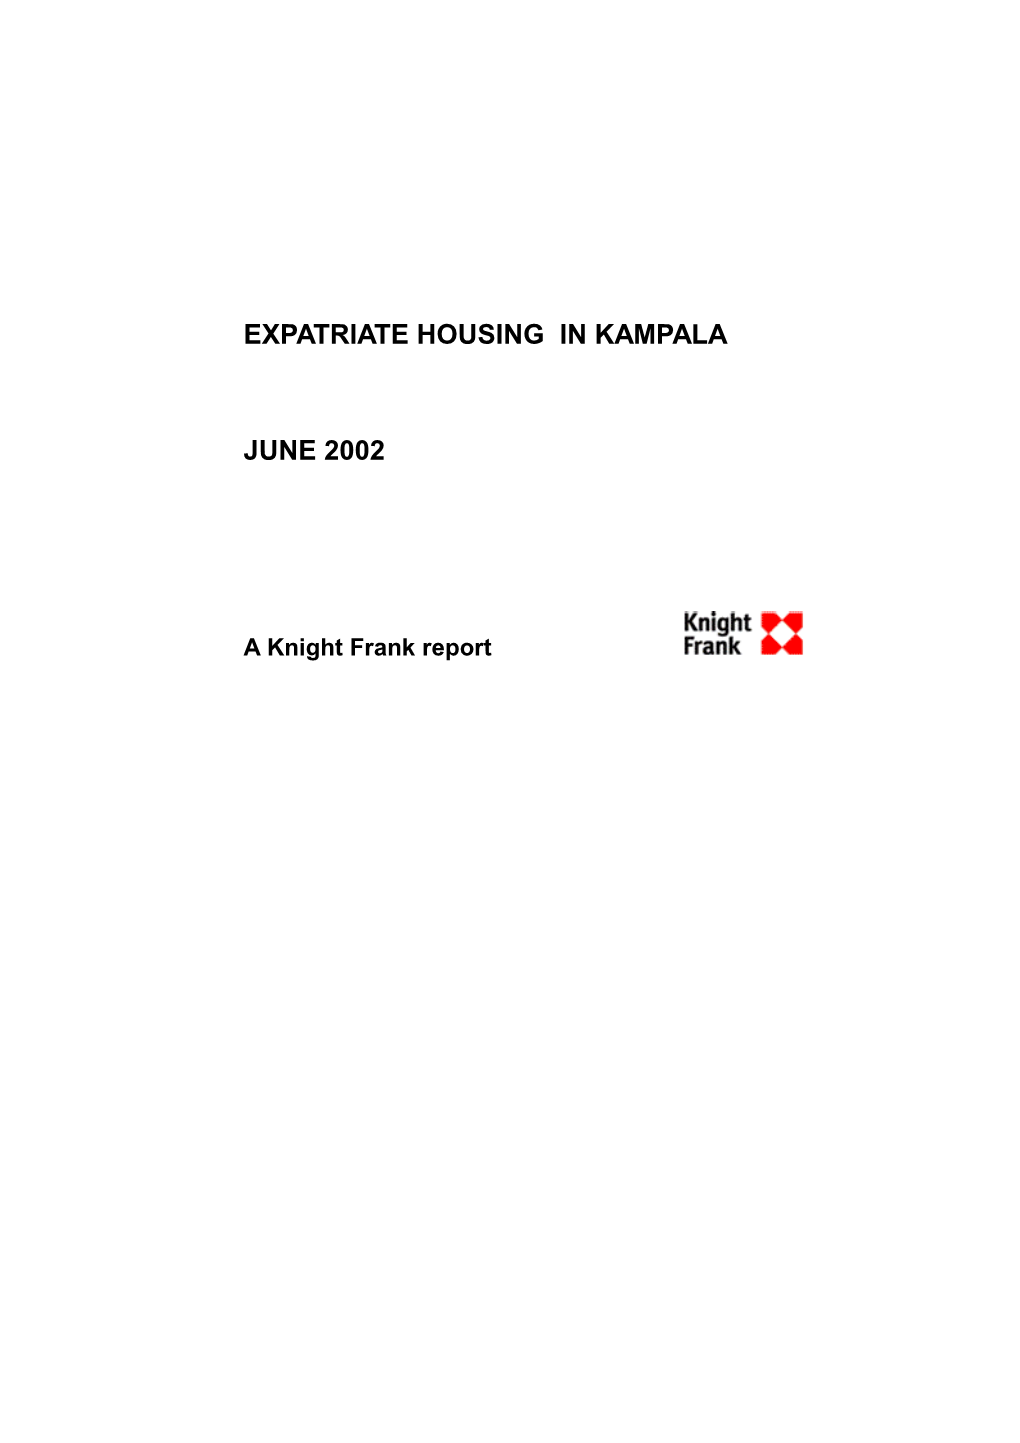 Expatriate Housing in Kampala June 2002